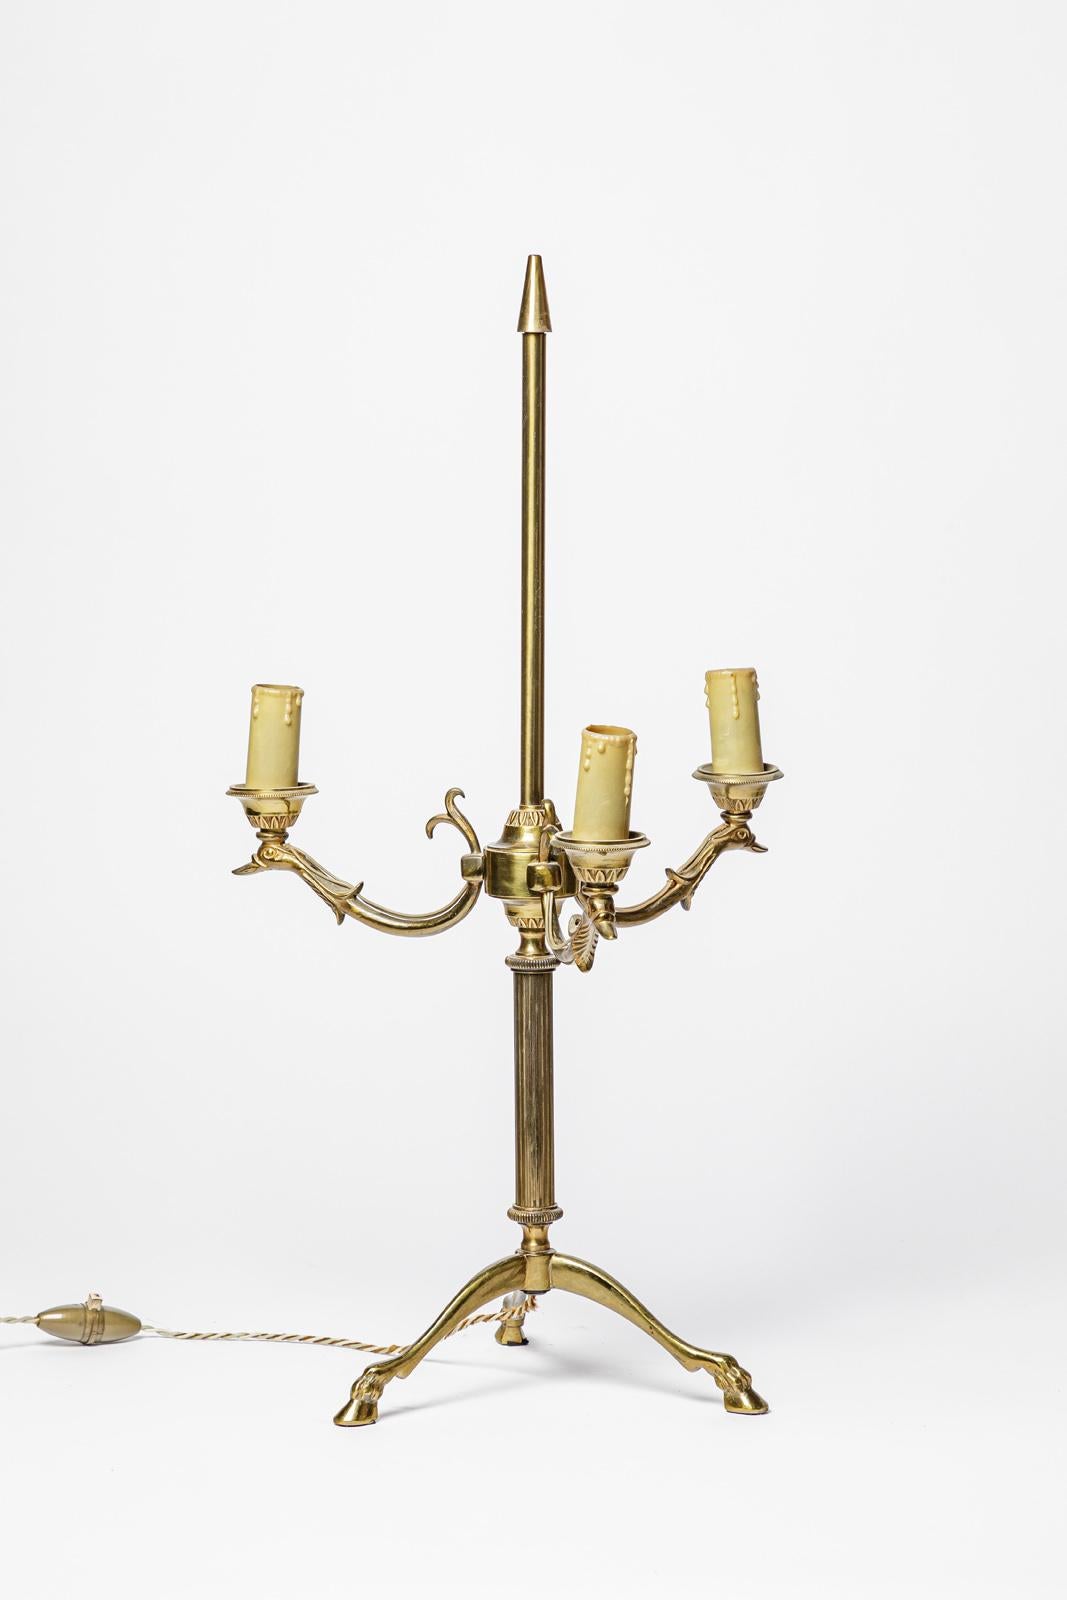 20th century design golden brass animals table lamp by Maison Jansen 1970 In Good Condition For Sale In Neuilly-en- sancerre, FR